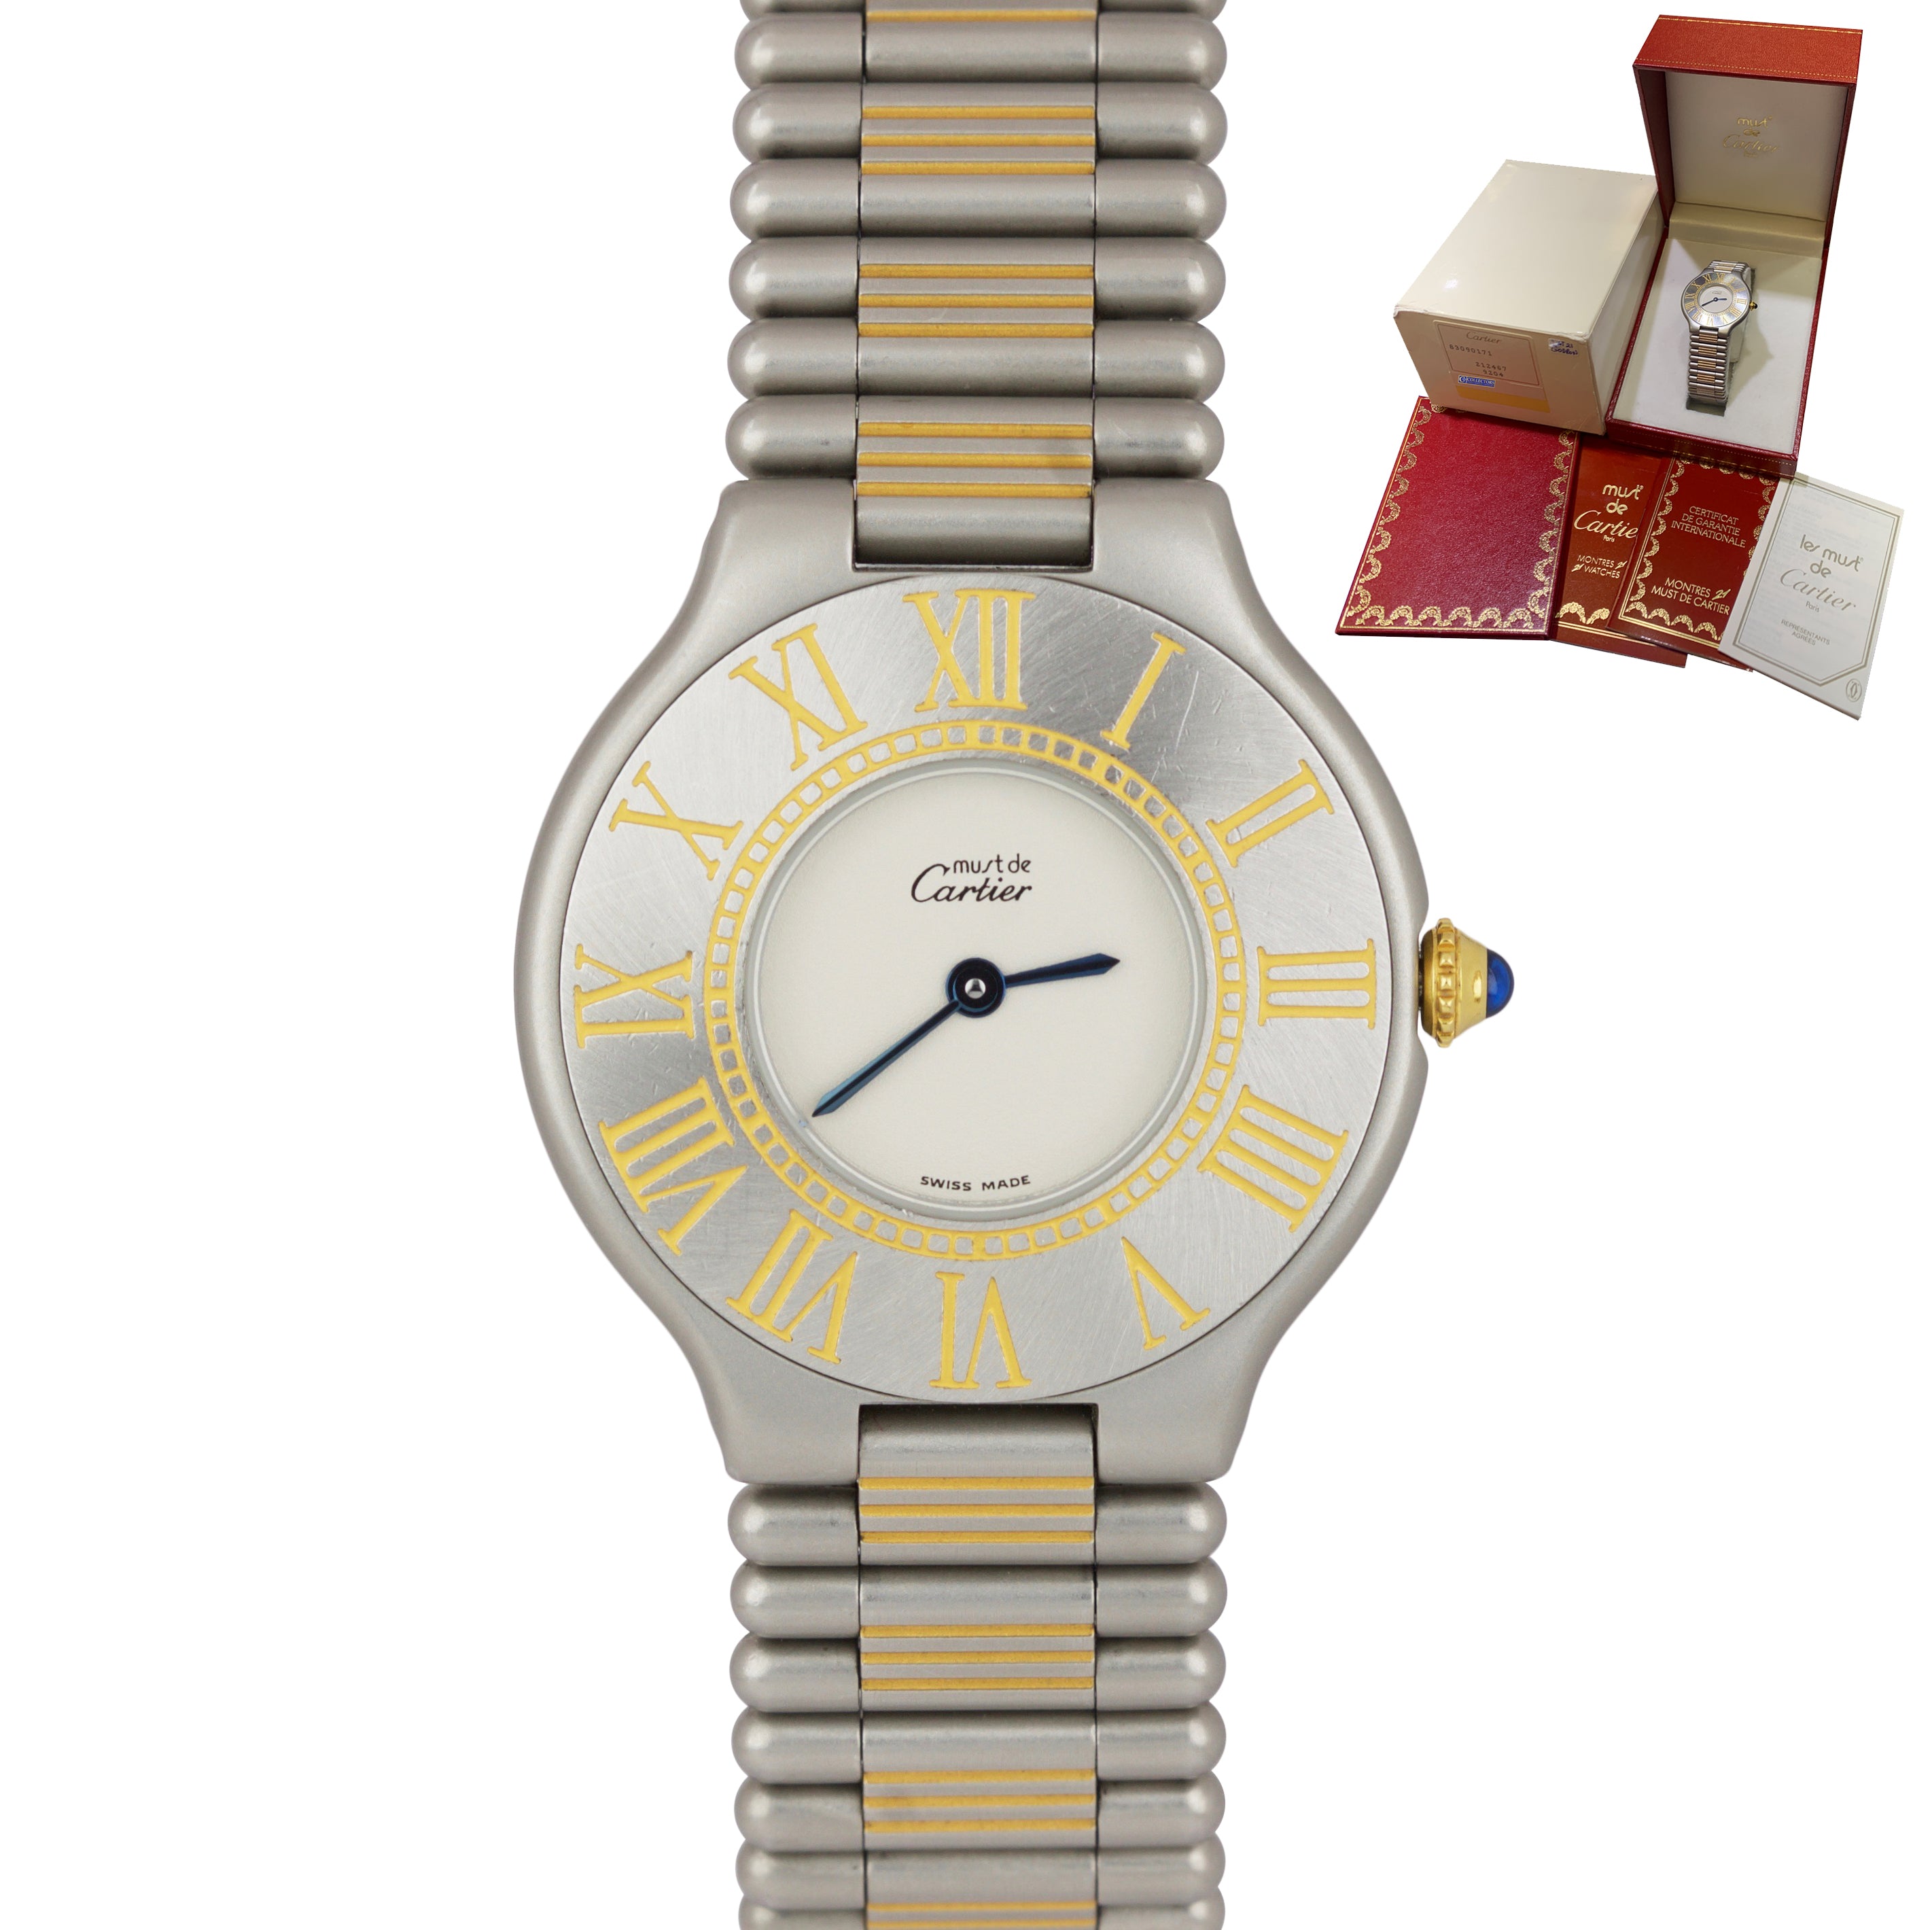 31mm Stainless Steel Gold Quartz Watch 